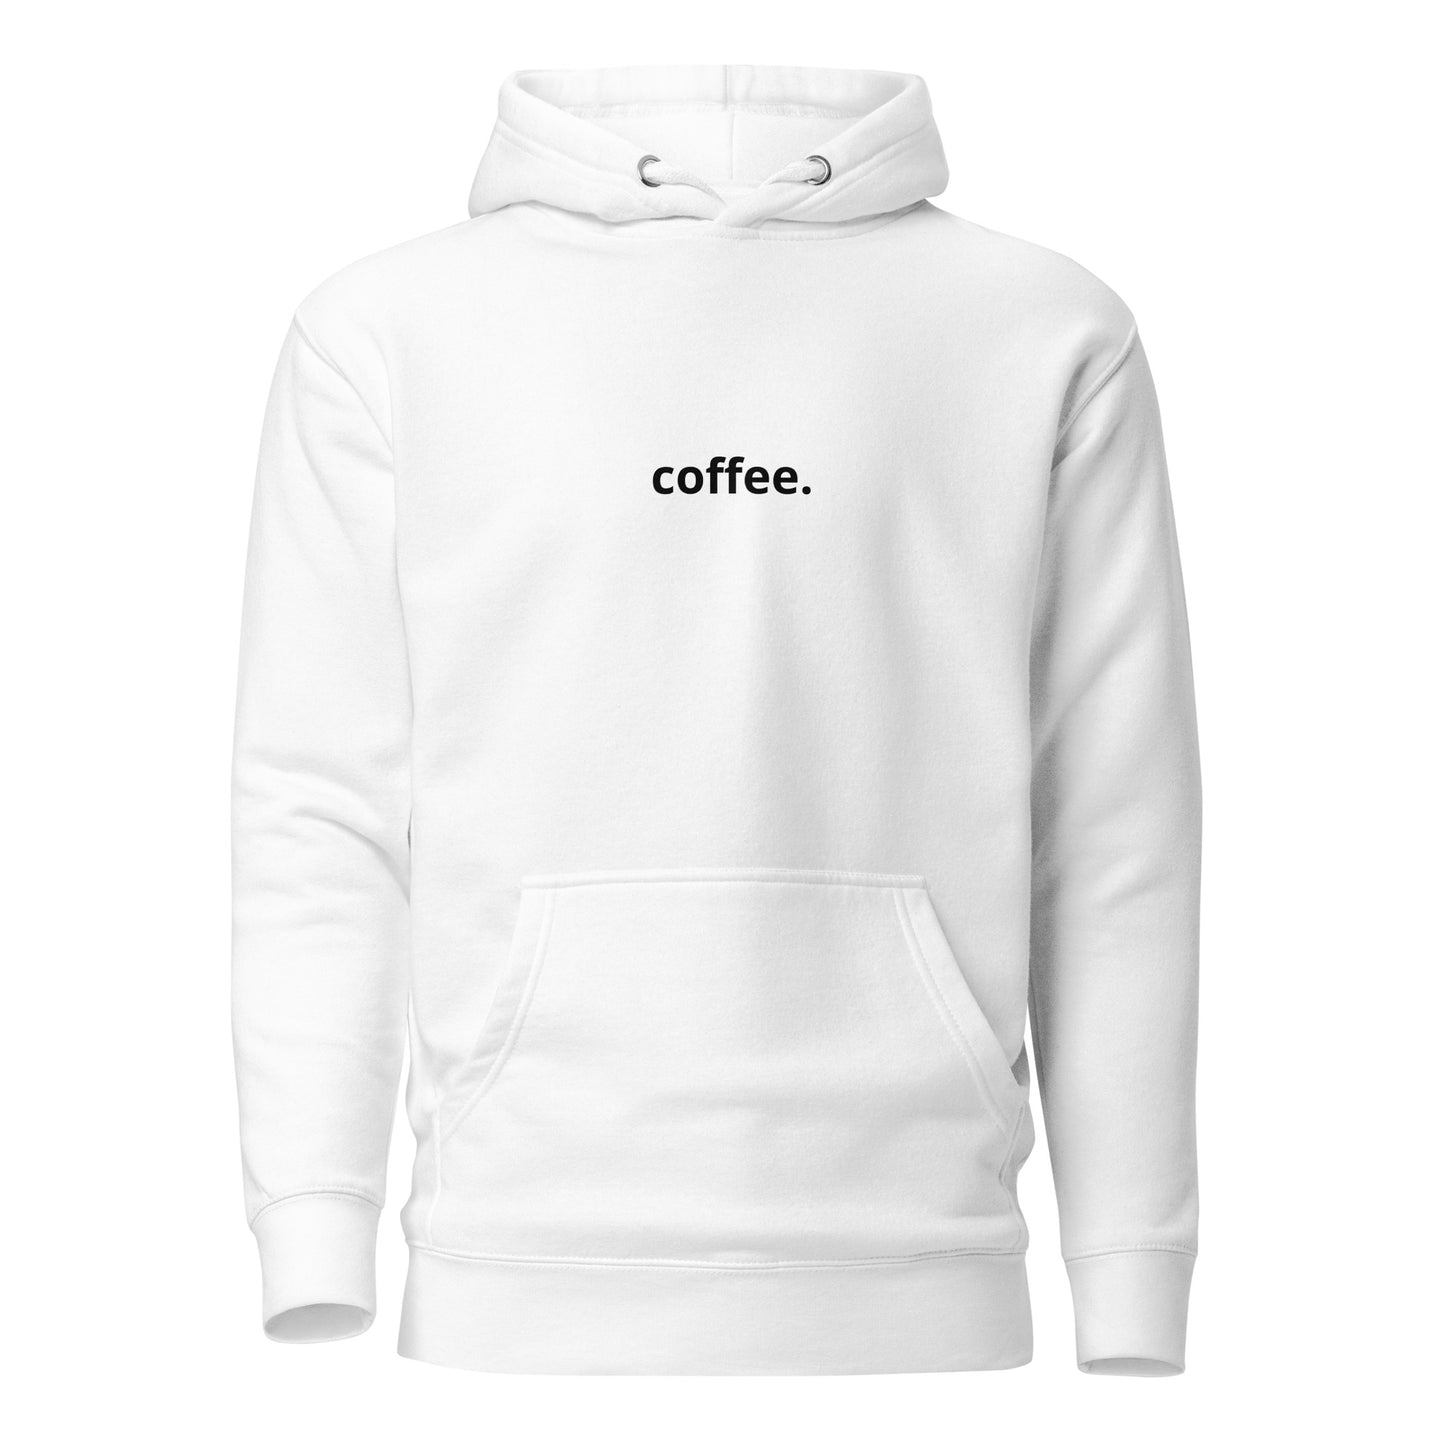 Coffee. Premium Cotton Hoodie